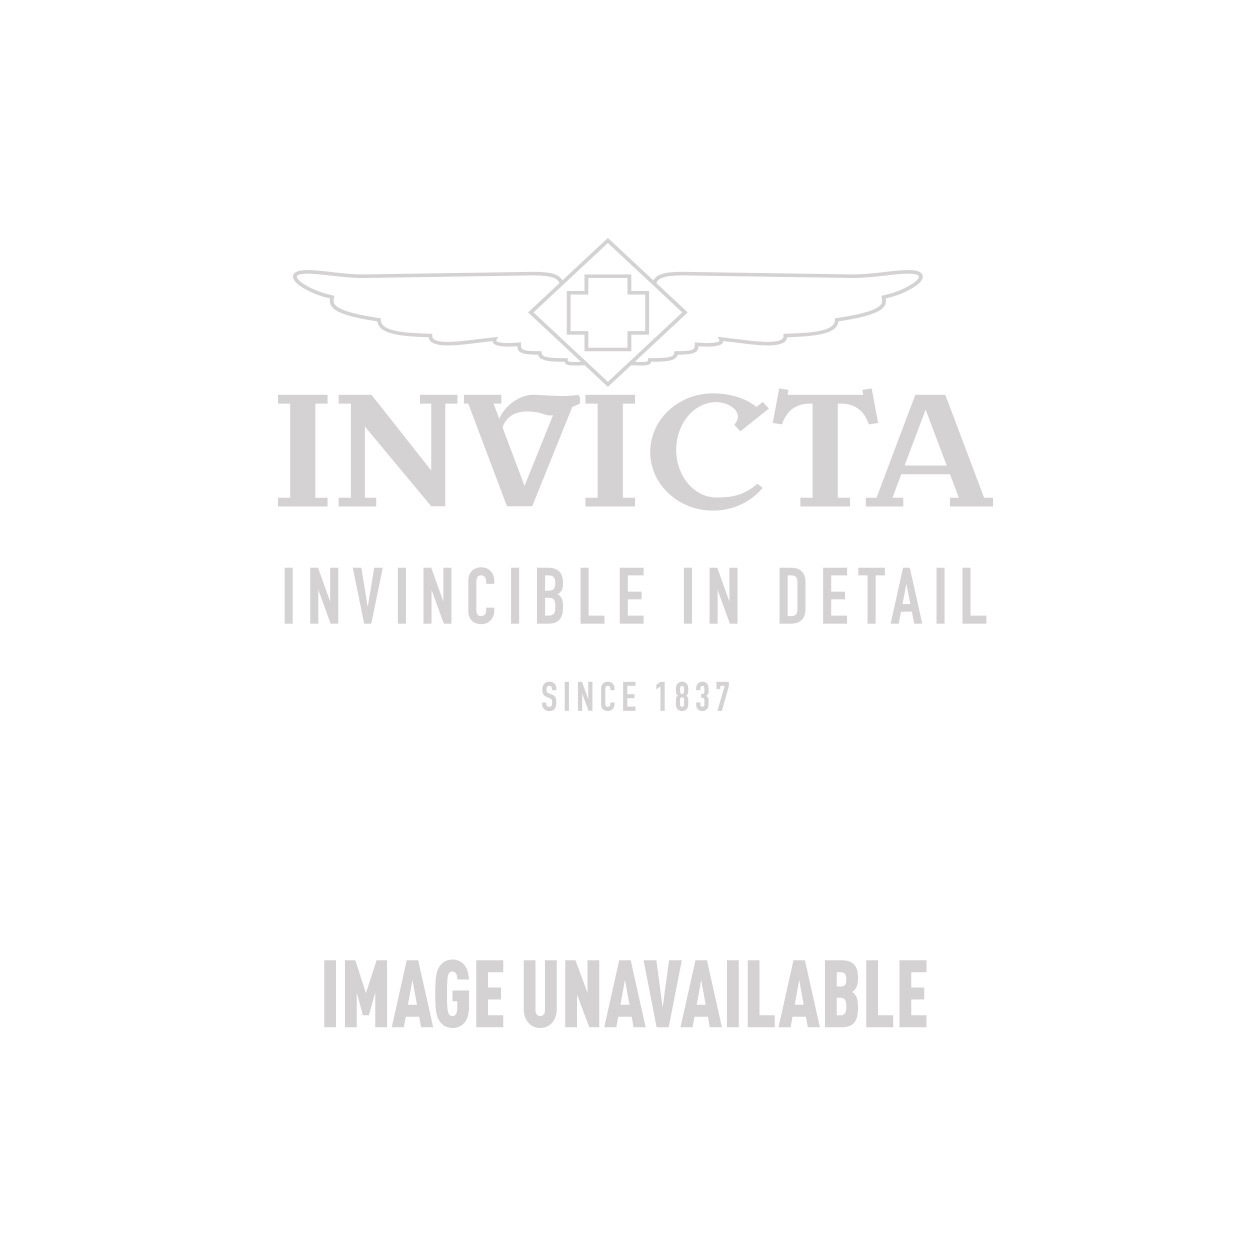 Invicta SHAQ Automatic .18 Carat Diamond Men's Watch w/Mother of Pearl Dial - 54mm, Black, Blue (37479)